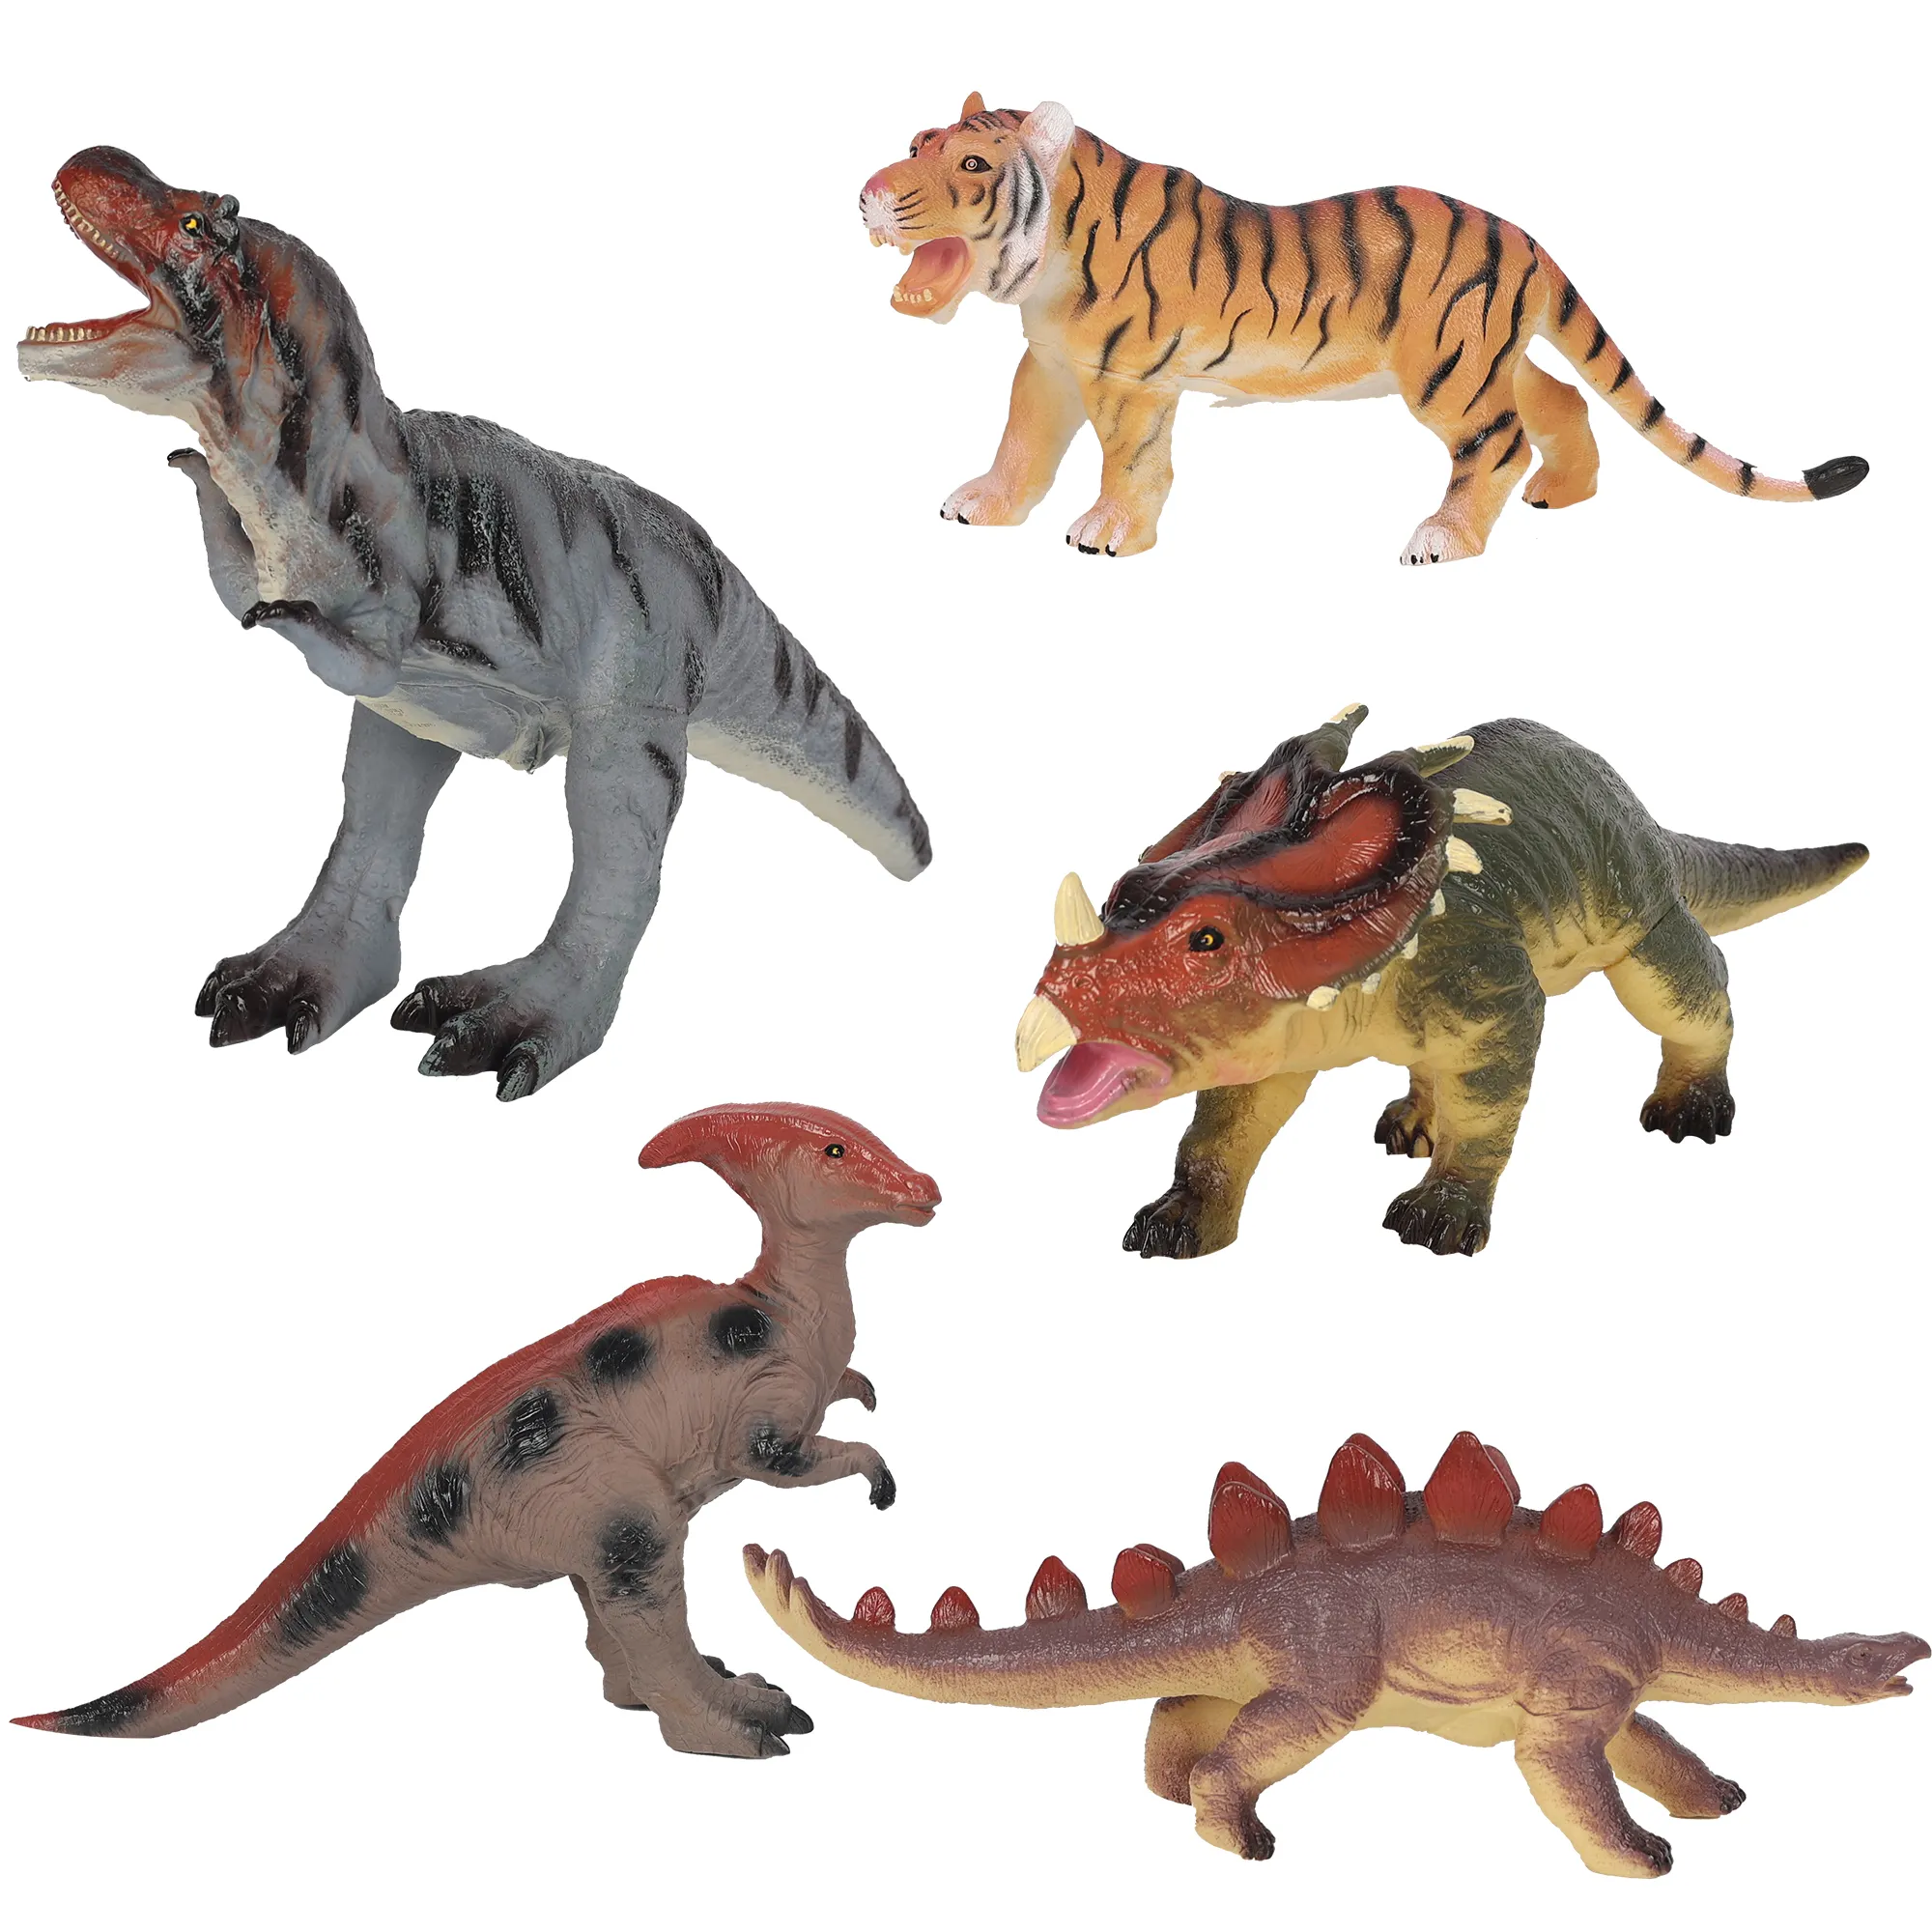 Dinosaurio Jurásico modelo simulación caminar tiranosaurio Dino juguete relleno dinosaurio suave juguetes educativos para niños